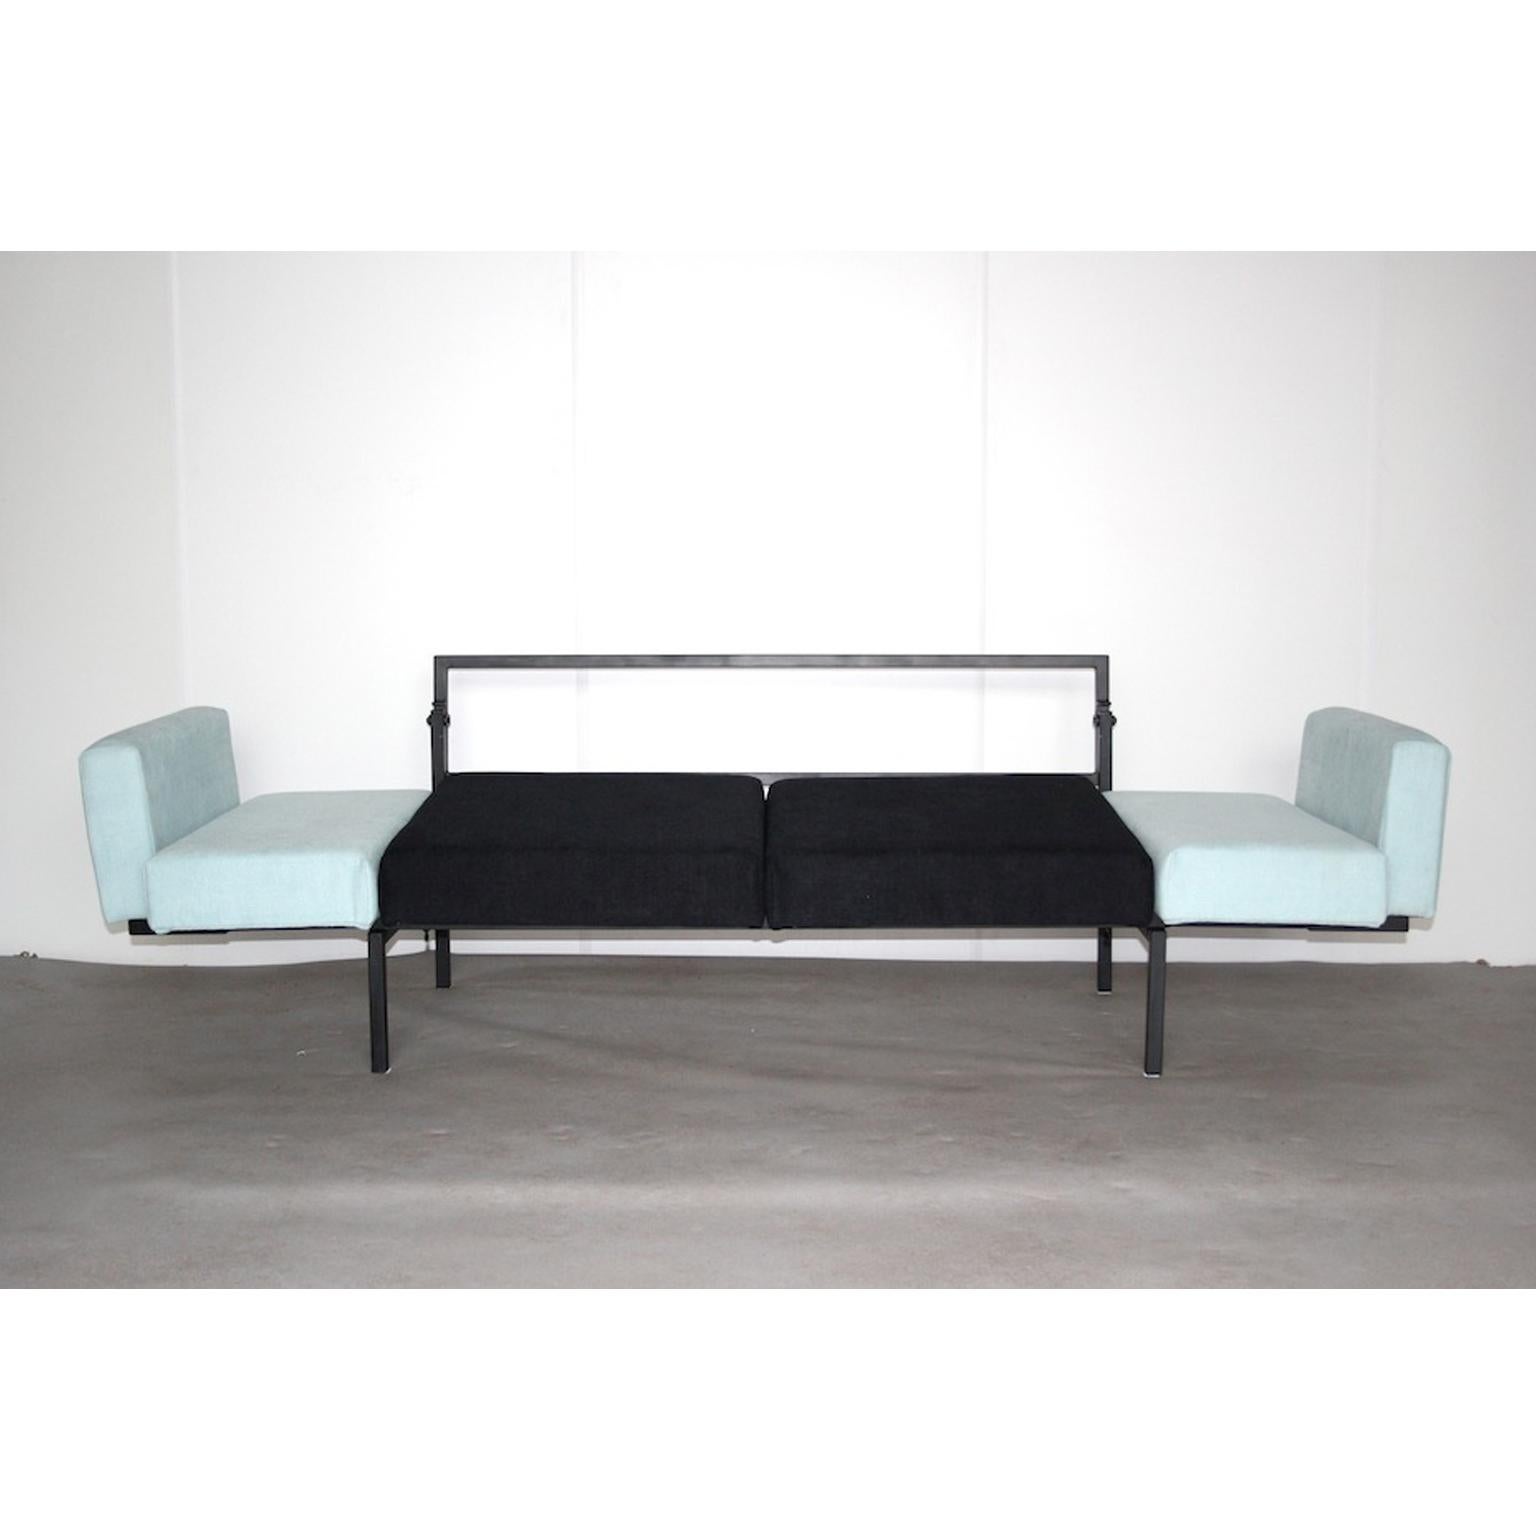 Metal Sofa or Daybed by Coen de Vries for Devo, Dutch Design, 1952